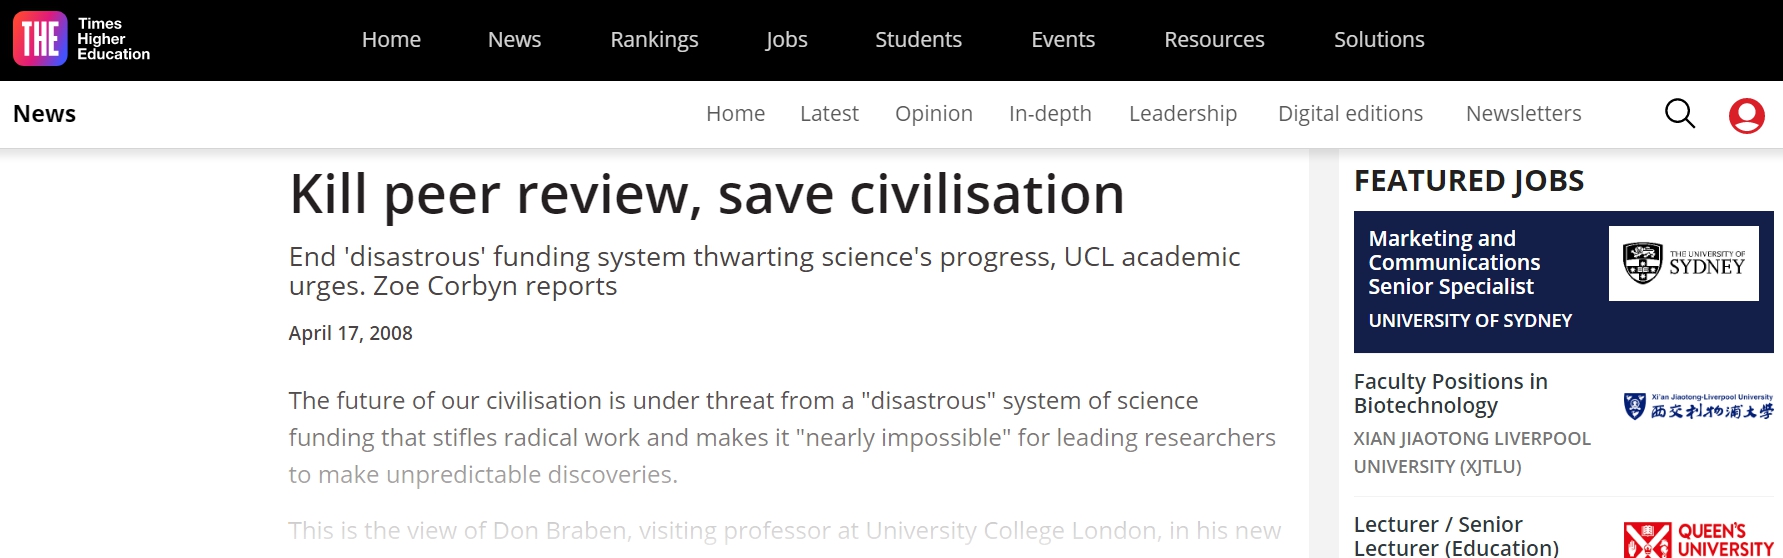 2008-04-17 Kill peer review, save civilisation   Times Higher Education.jpg